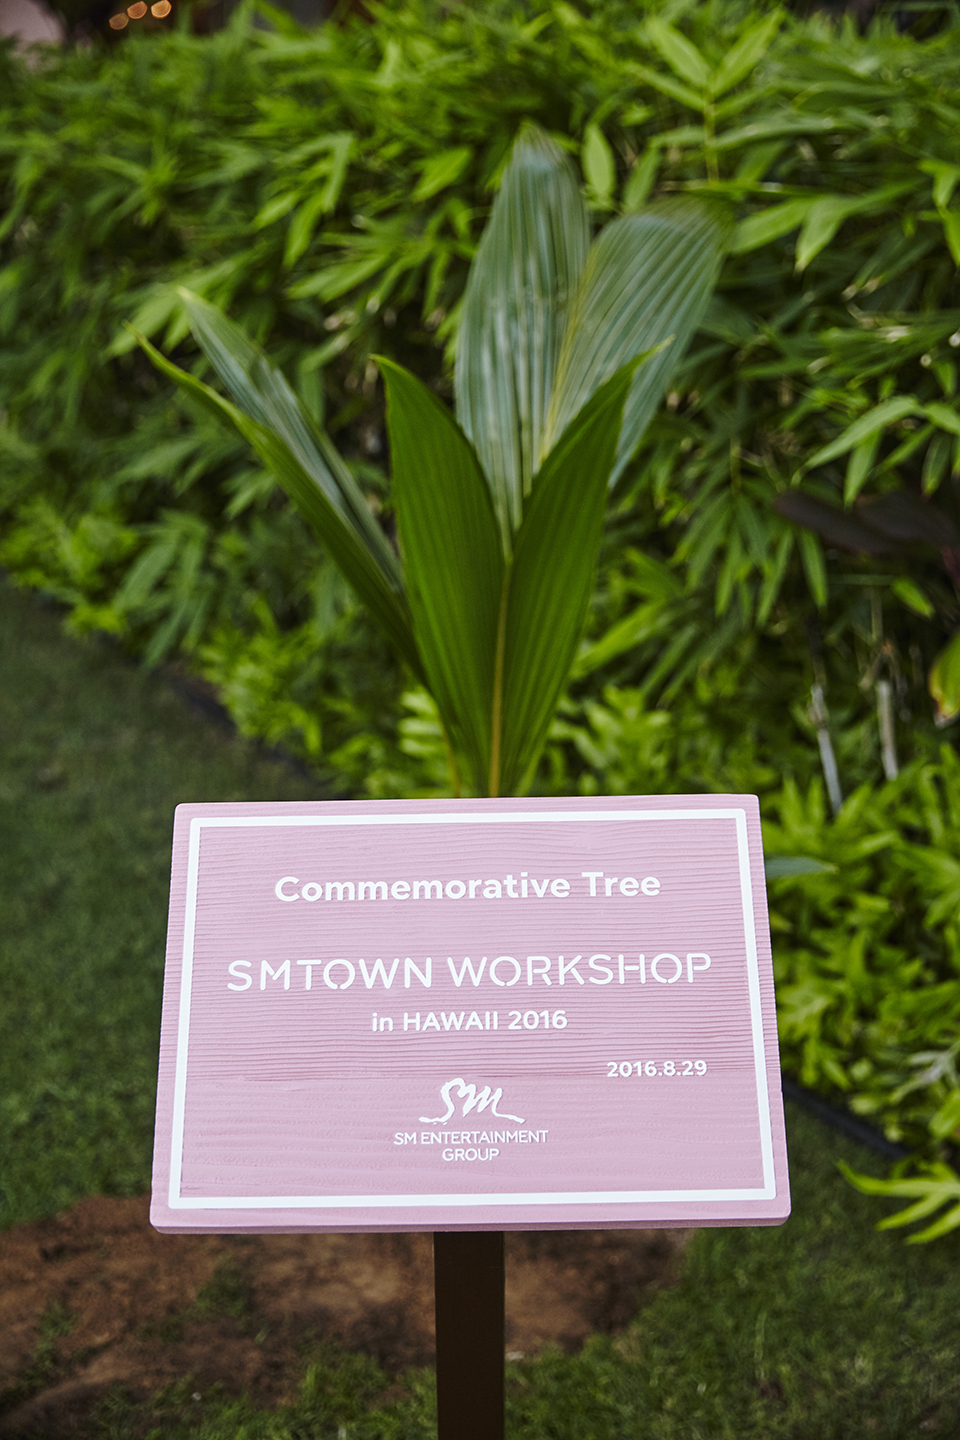 SMTOWN-Workshop-Commemorative-Tree